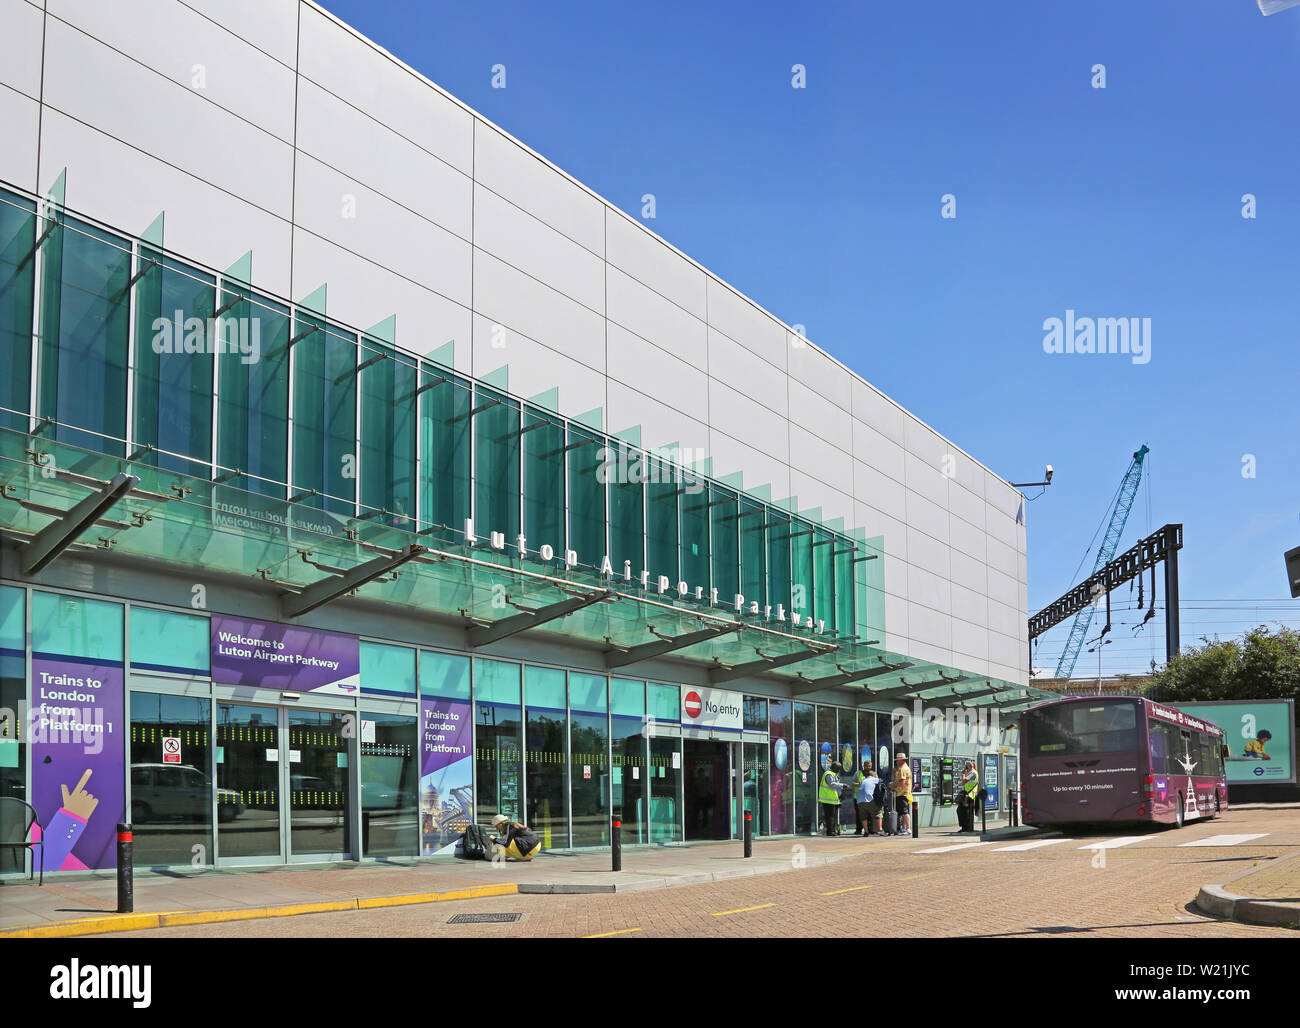 Luton Airport, London. Eingang zum Bahnhof Luton Airport Parkway. Passagiere warten, den Shuttle Bus zum Flughafen Terminal. Stockfoto